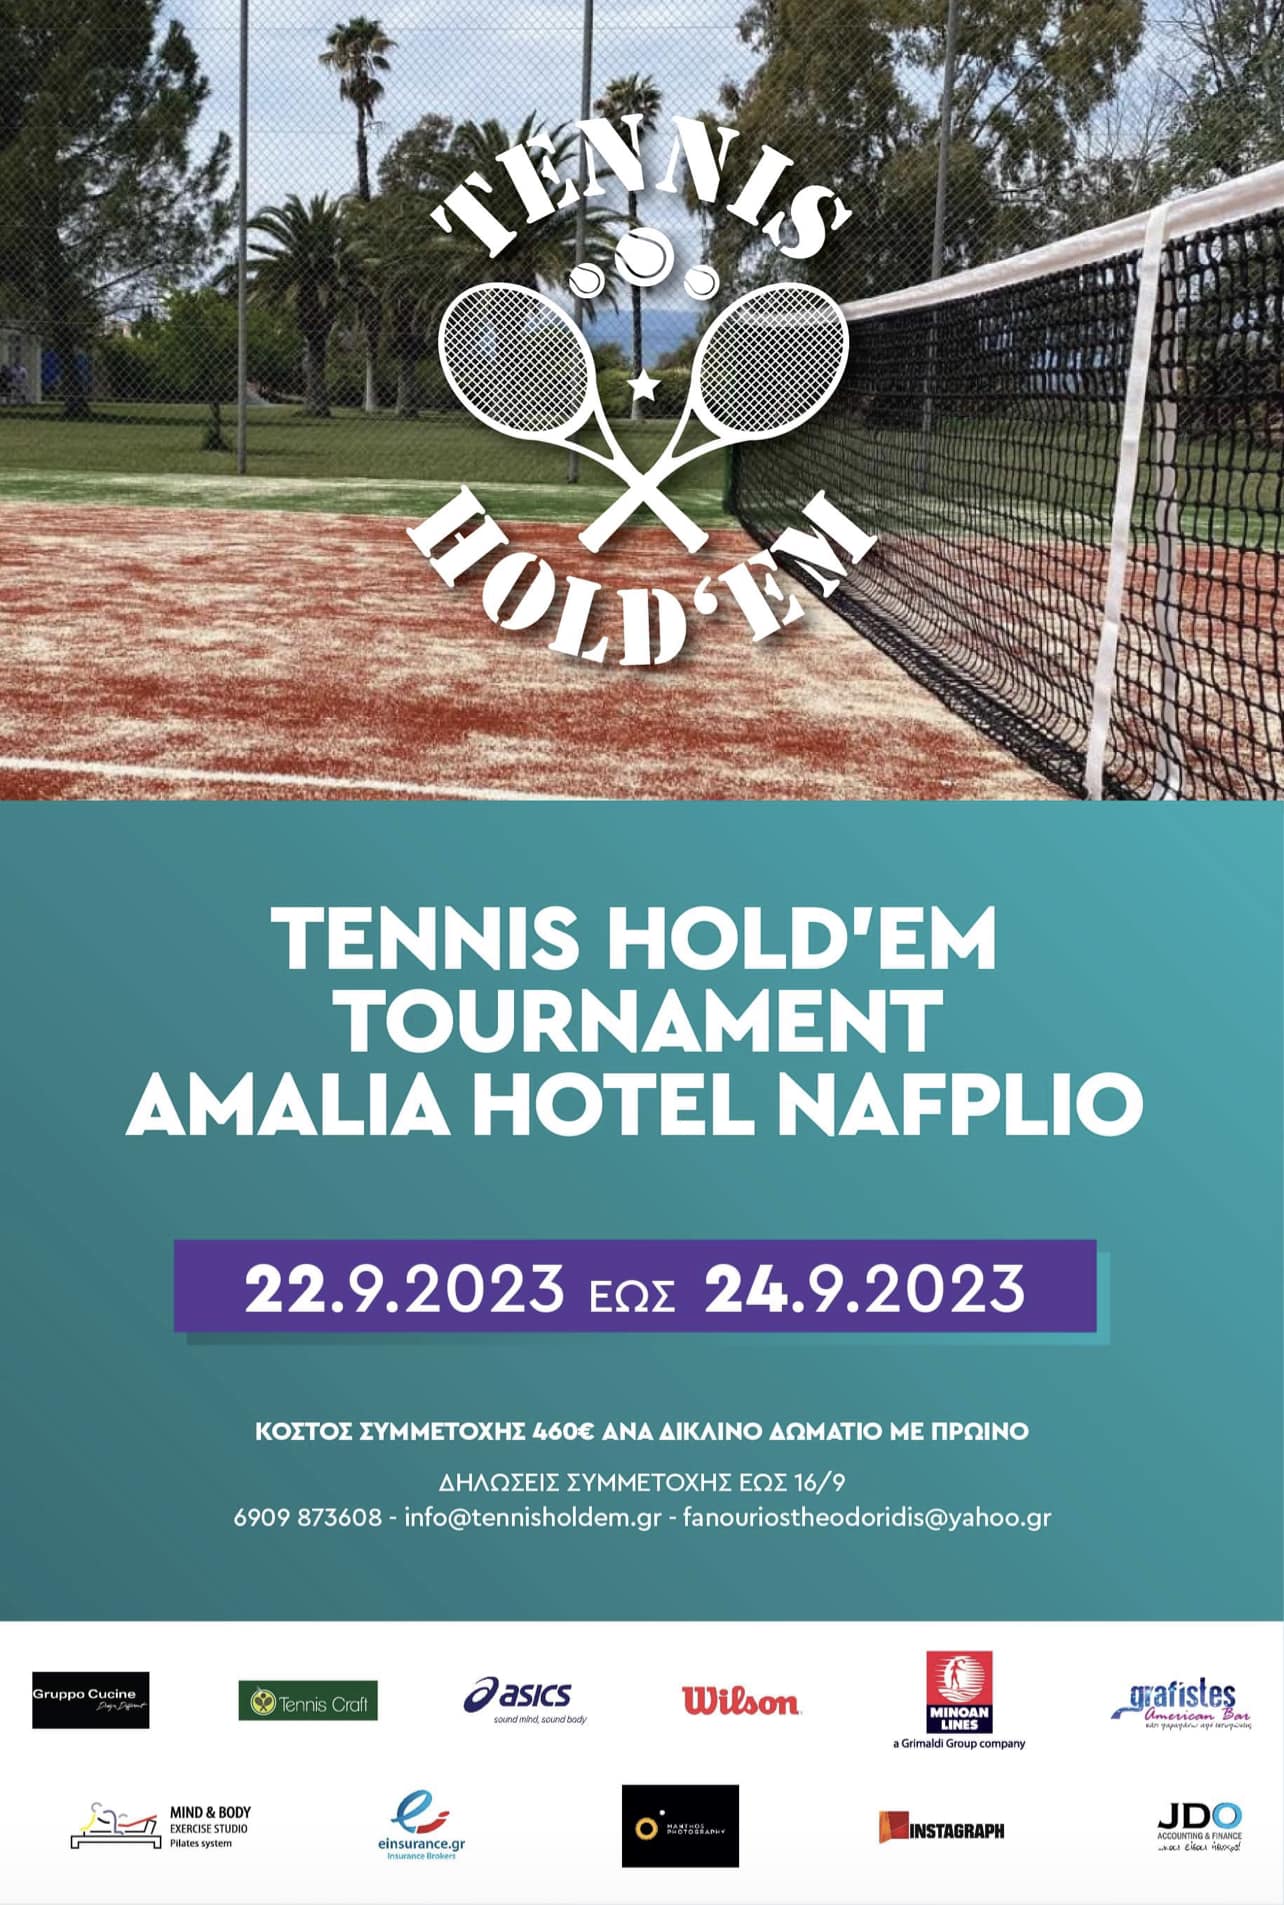 TENNIS HOLDEM TOURNAMENT - AMALIA HOTEL (NAFPLIO) - SEPTEMBER 2023